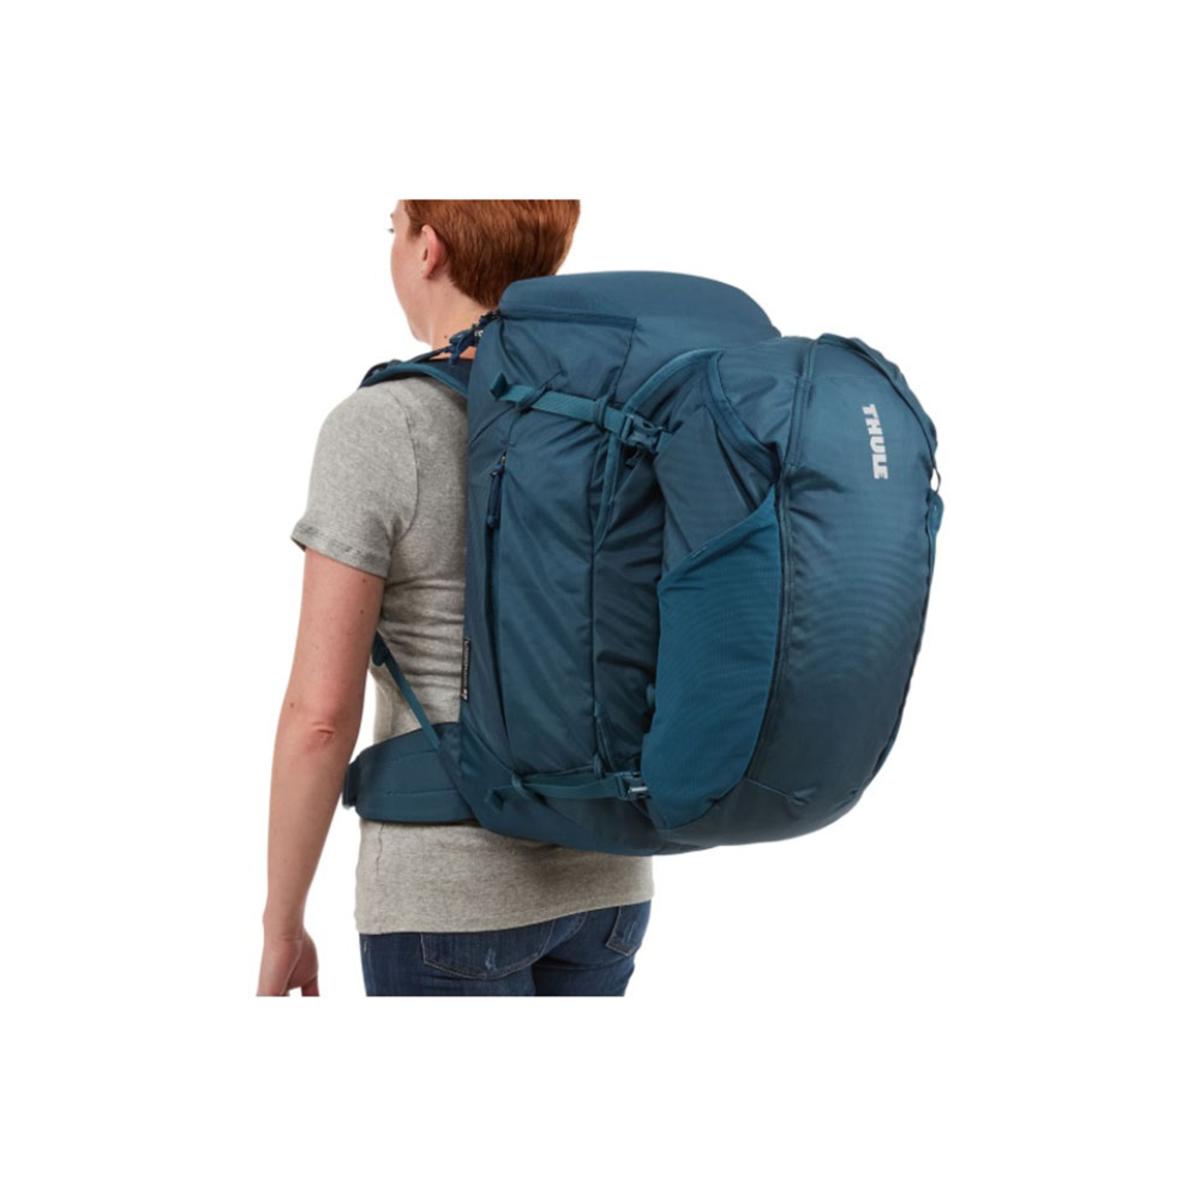 Thule Women's Landmark 60L Travel Backpack with Detachable Daypack